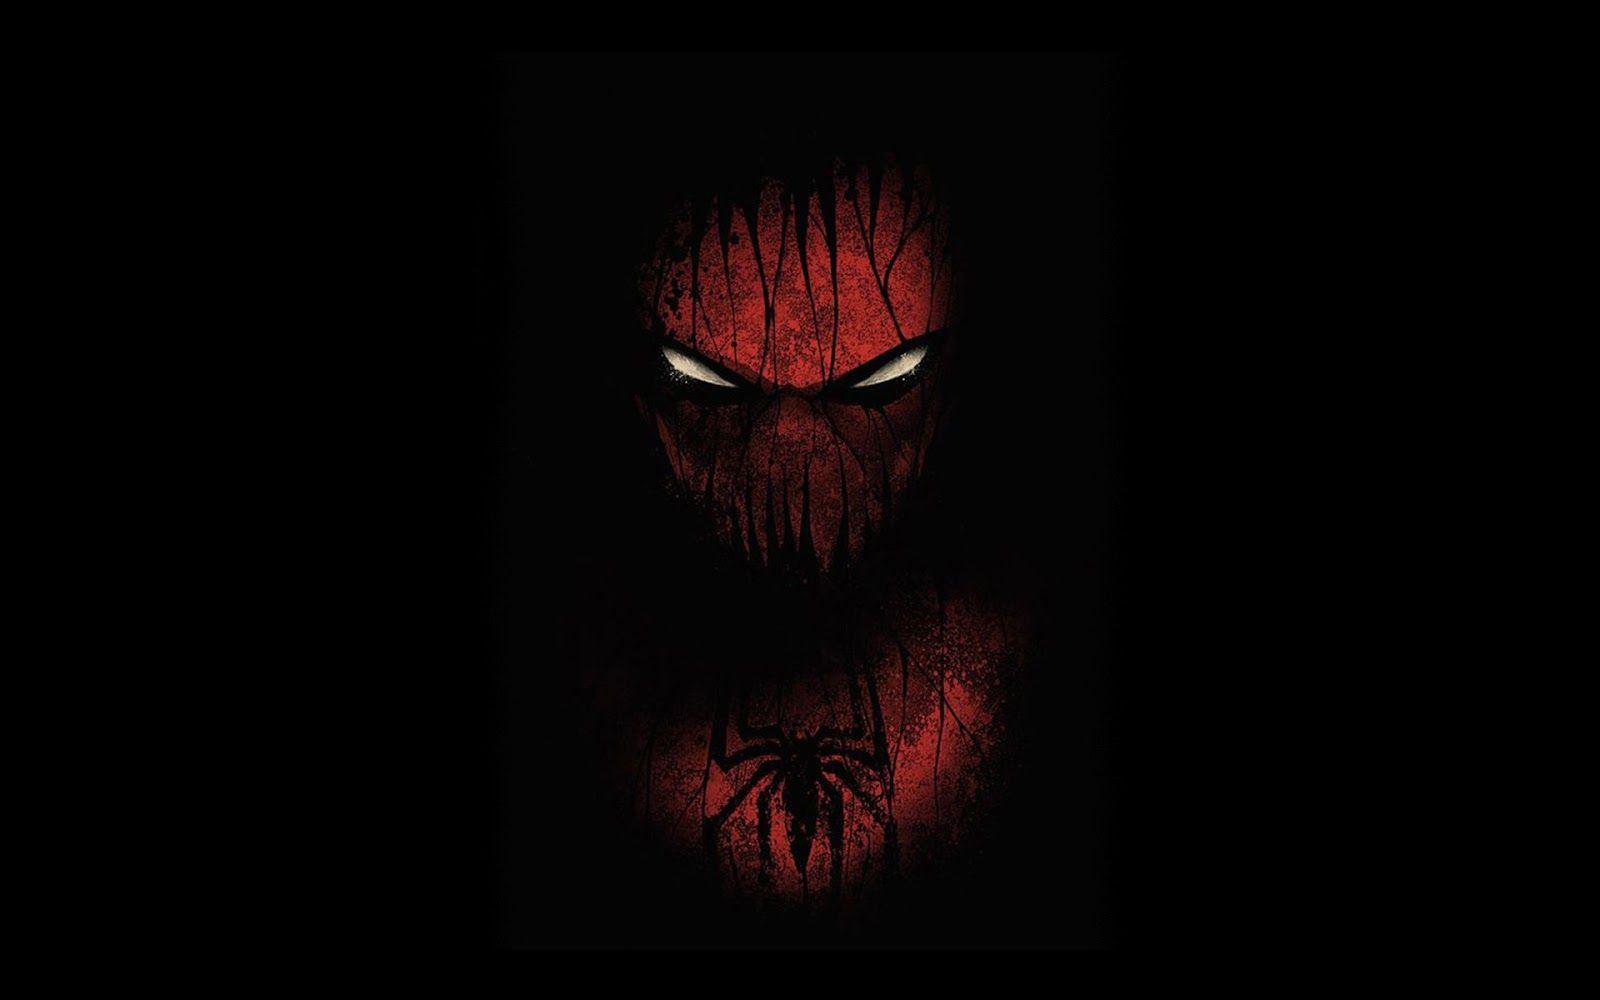 Spiderman Wallpaper for Desktop